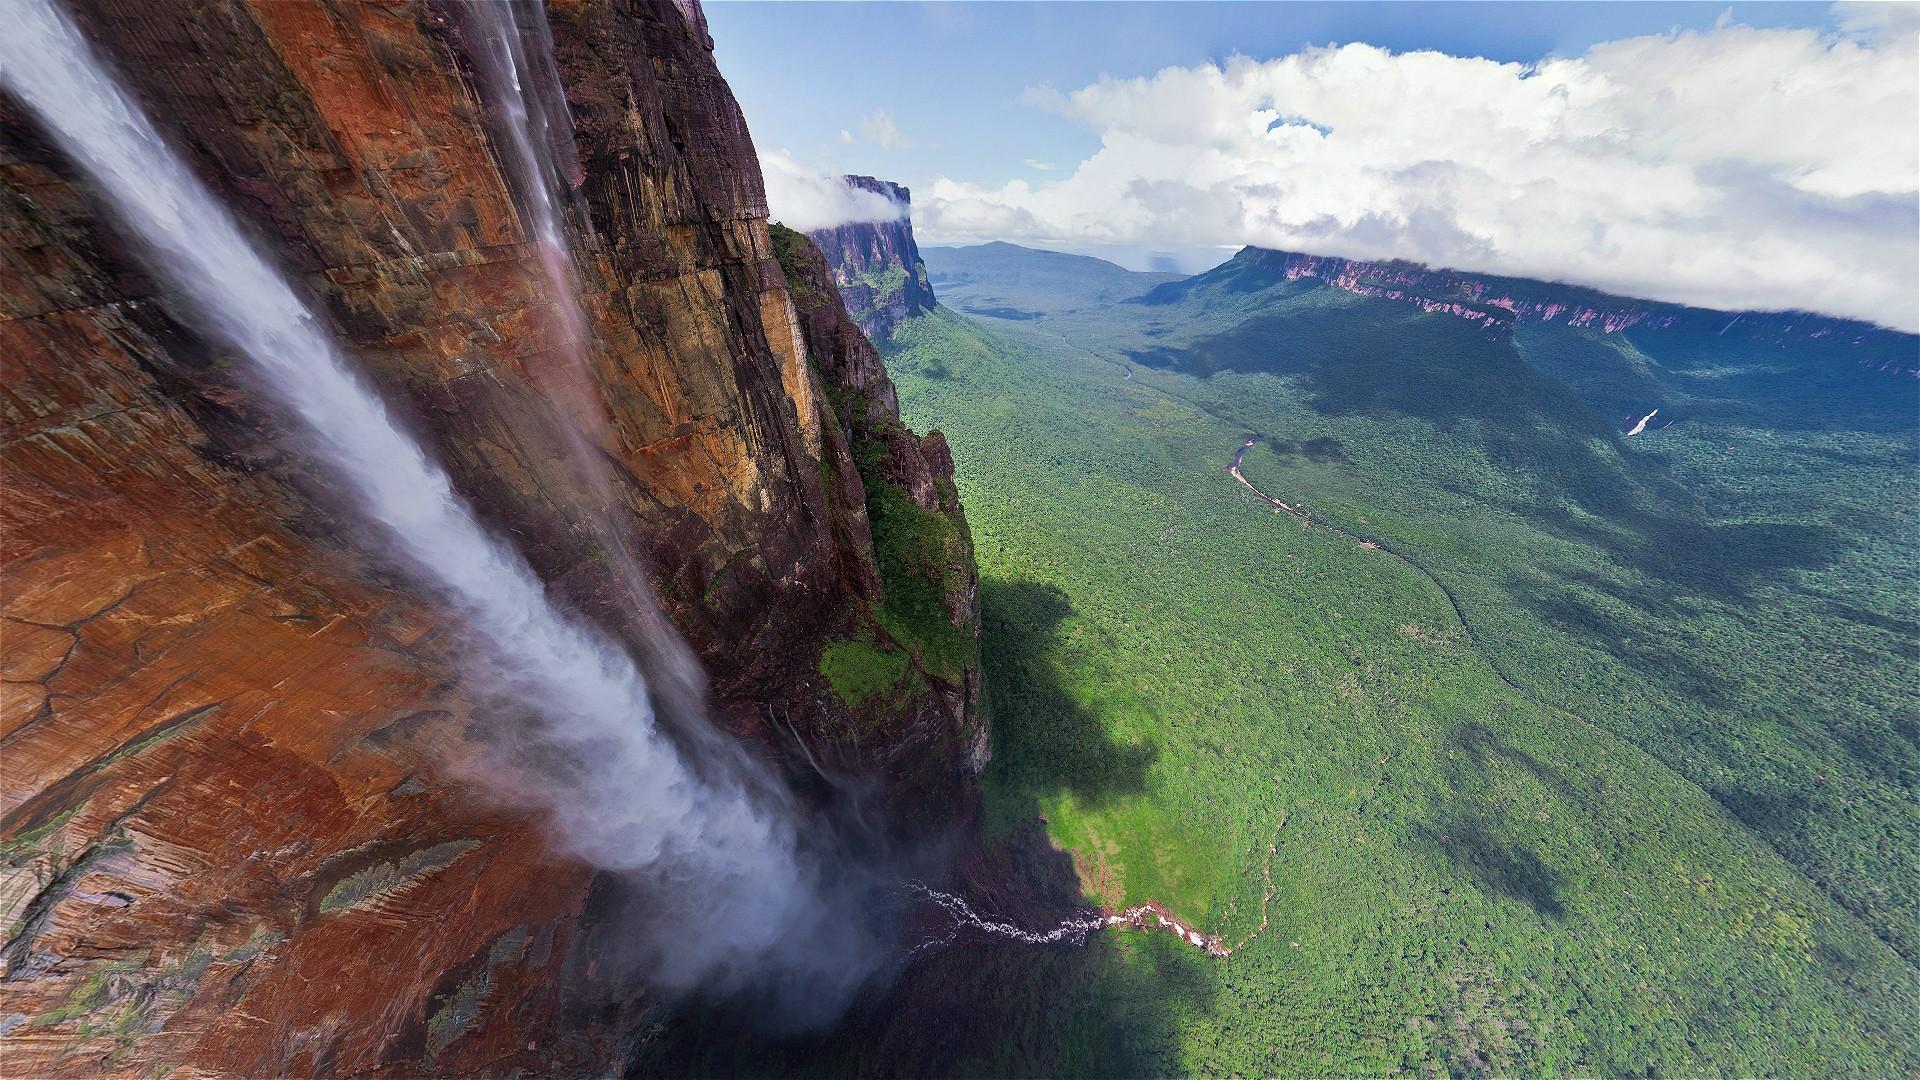 Angel Falls, Venezuela's highest uninterrupted waterfall